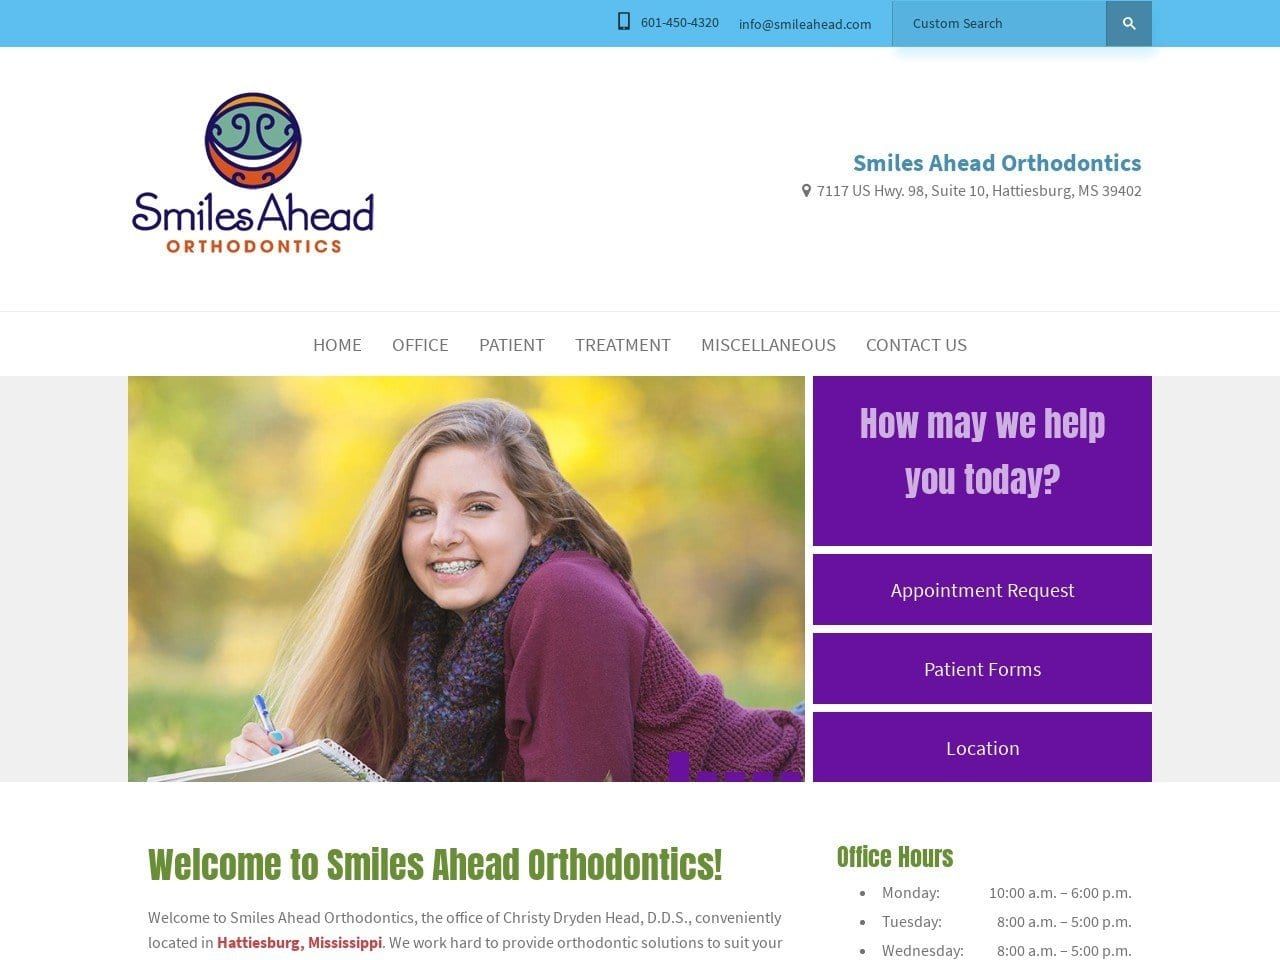 Smiles Ahead Website Screenshot from smileahead.com